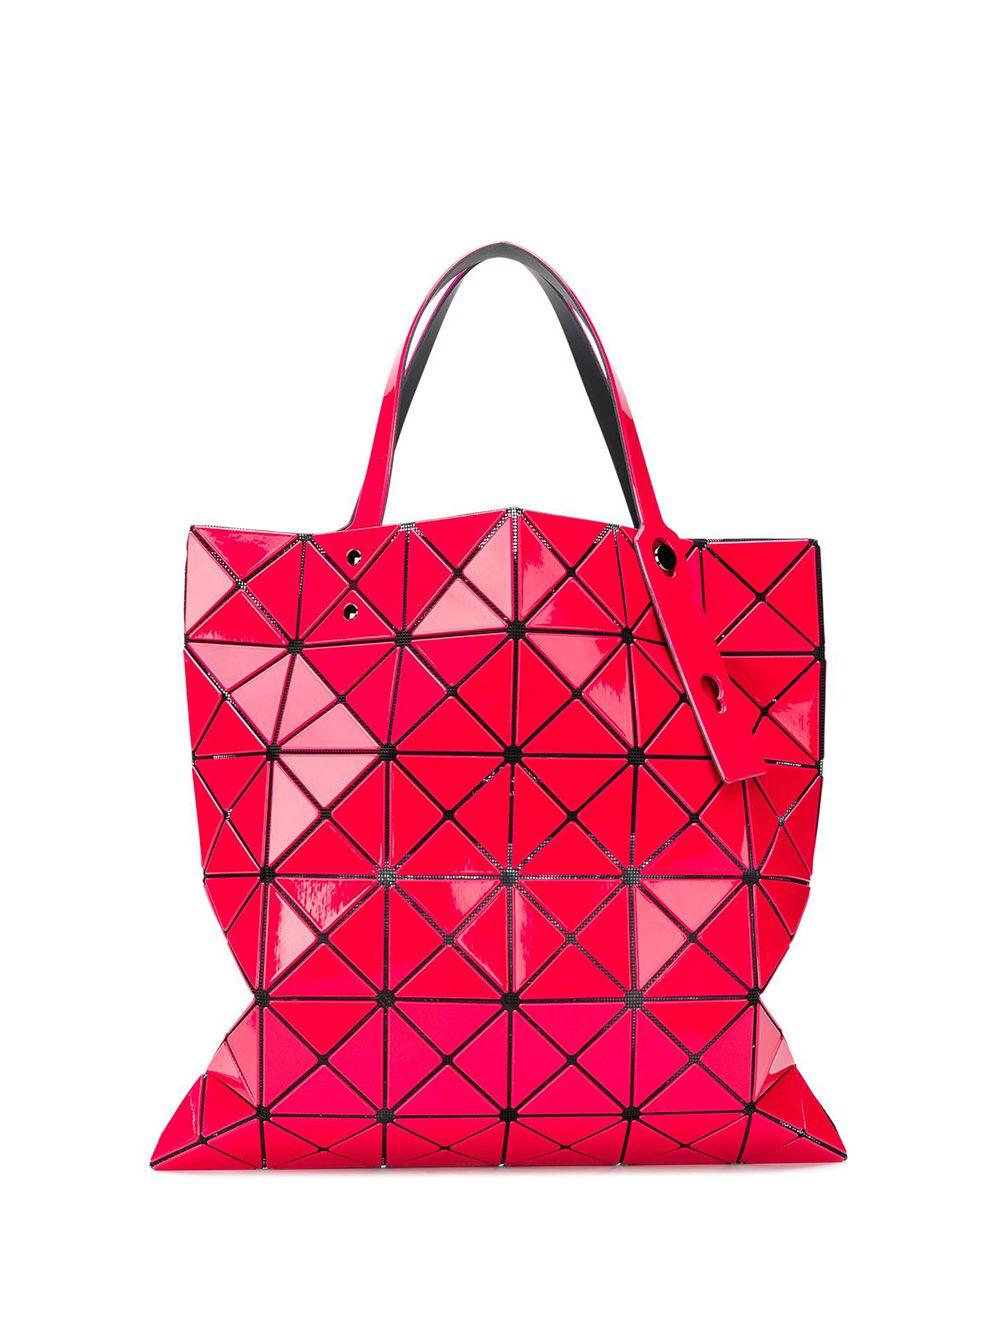 Bao Bao Issey Miyake Geometric Pattern Tote Bag in Pink & Purple (Pink ...